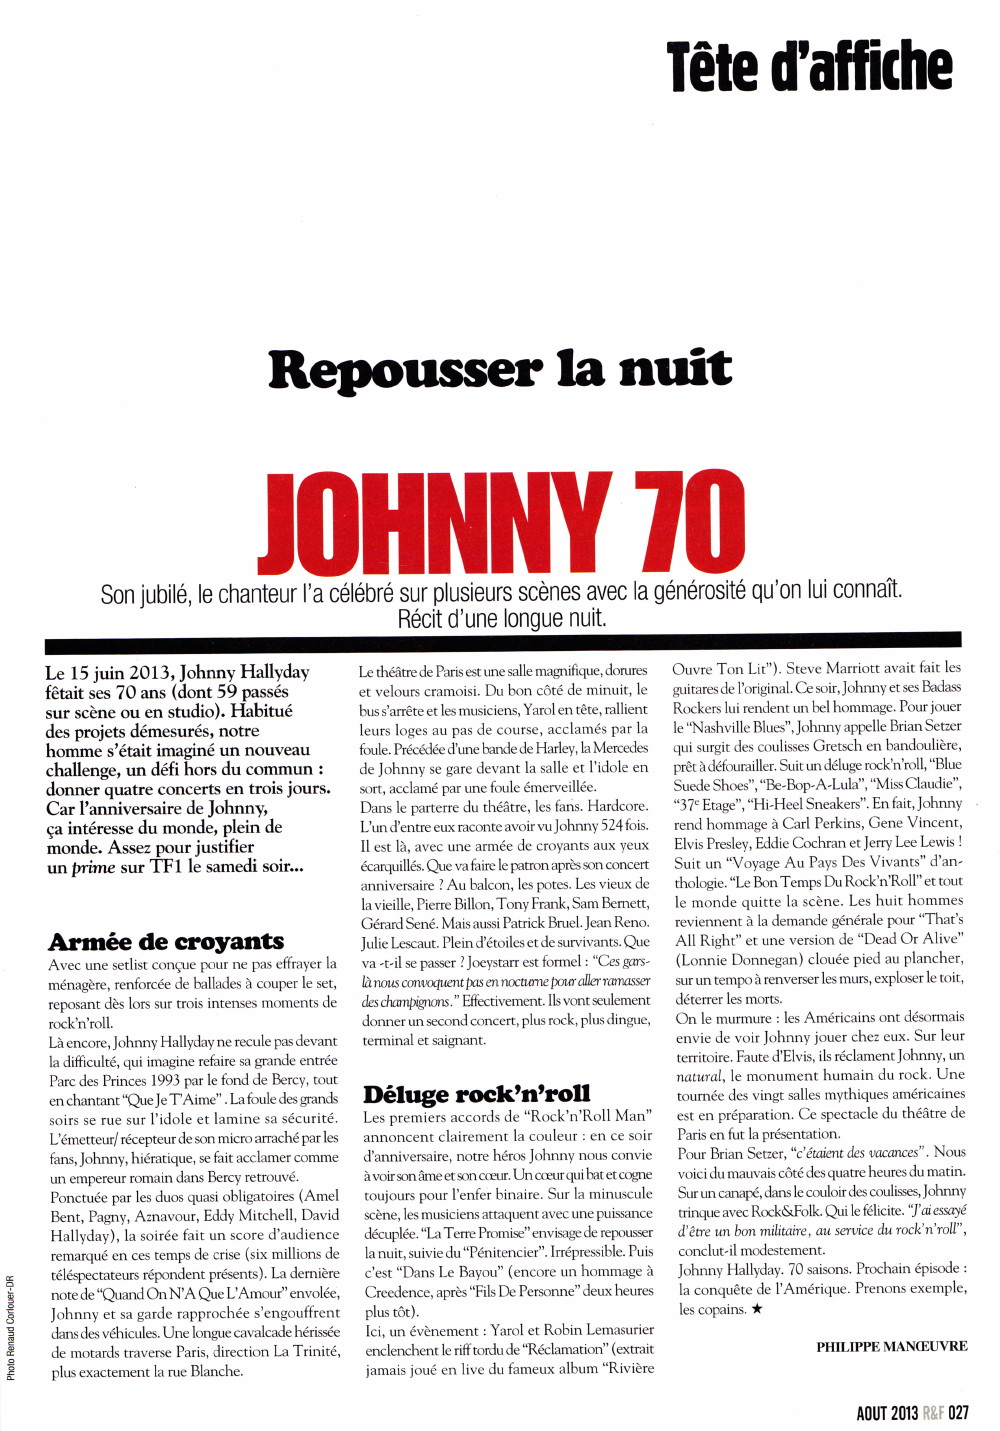 "JOHNNY 70" par PHILIPPE MANOEUVRE dans "ROCK AND FOLK" n°552 (août 2013) 13071412033915789311379172